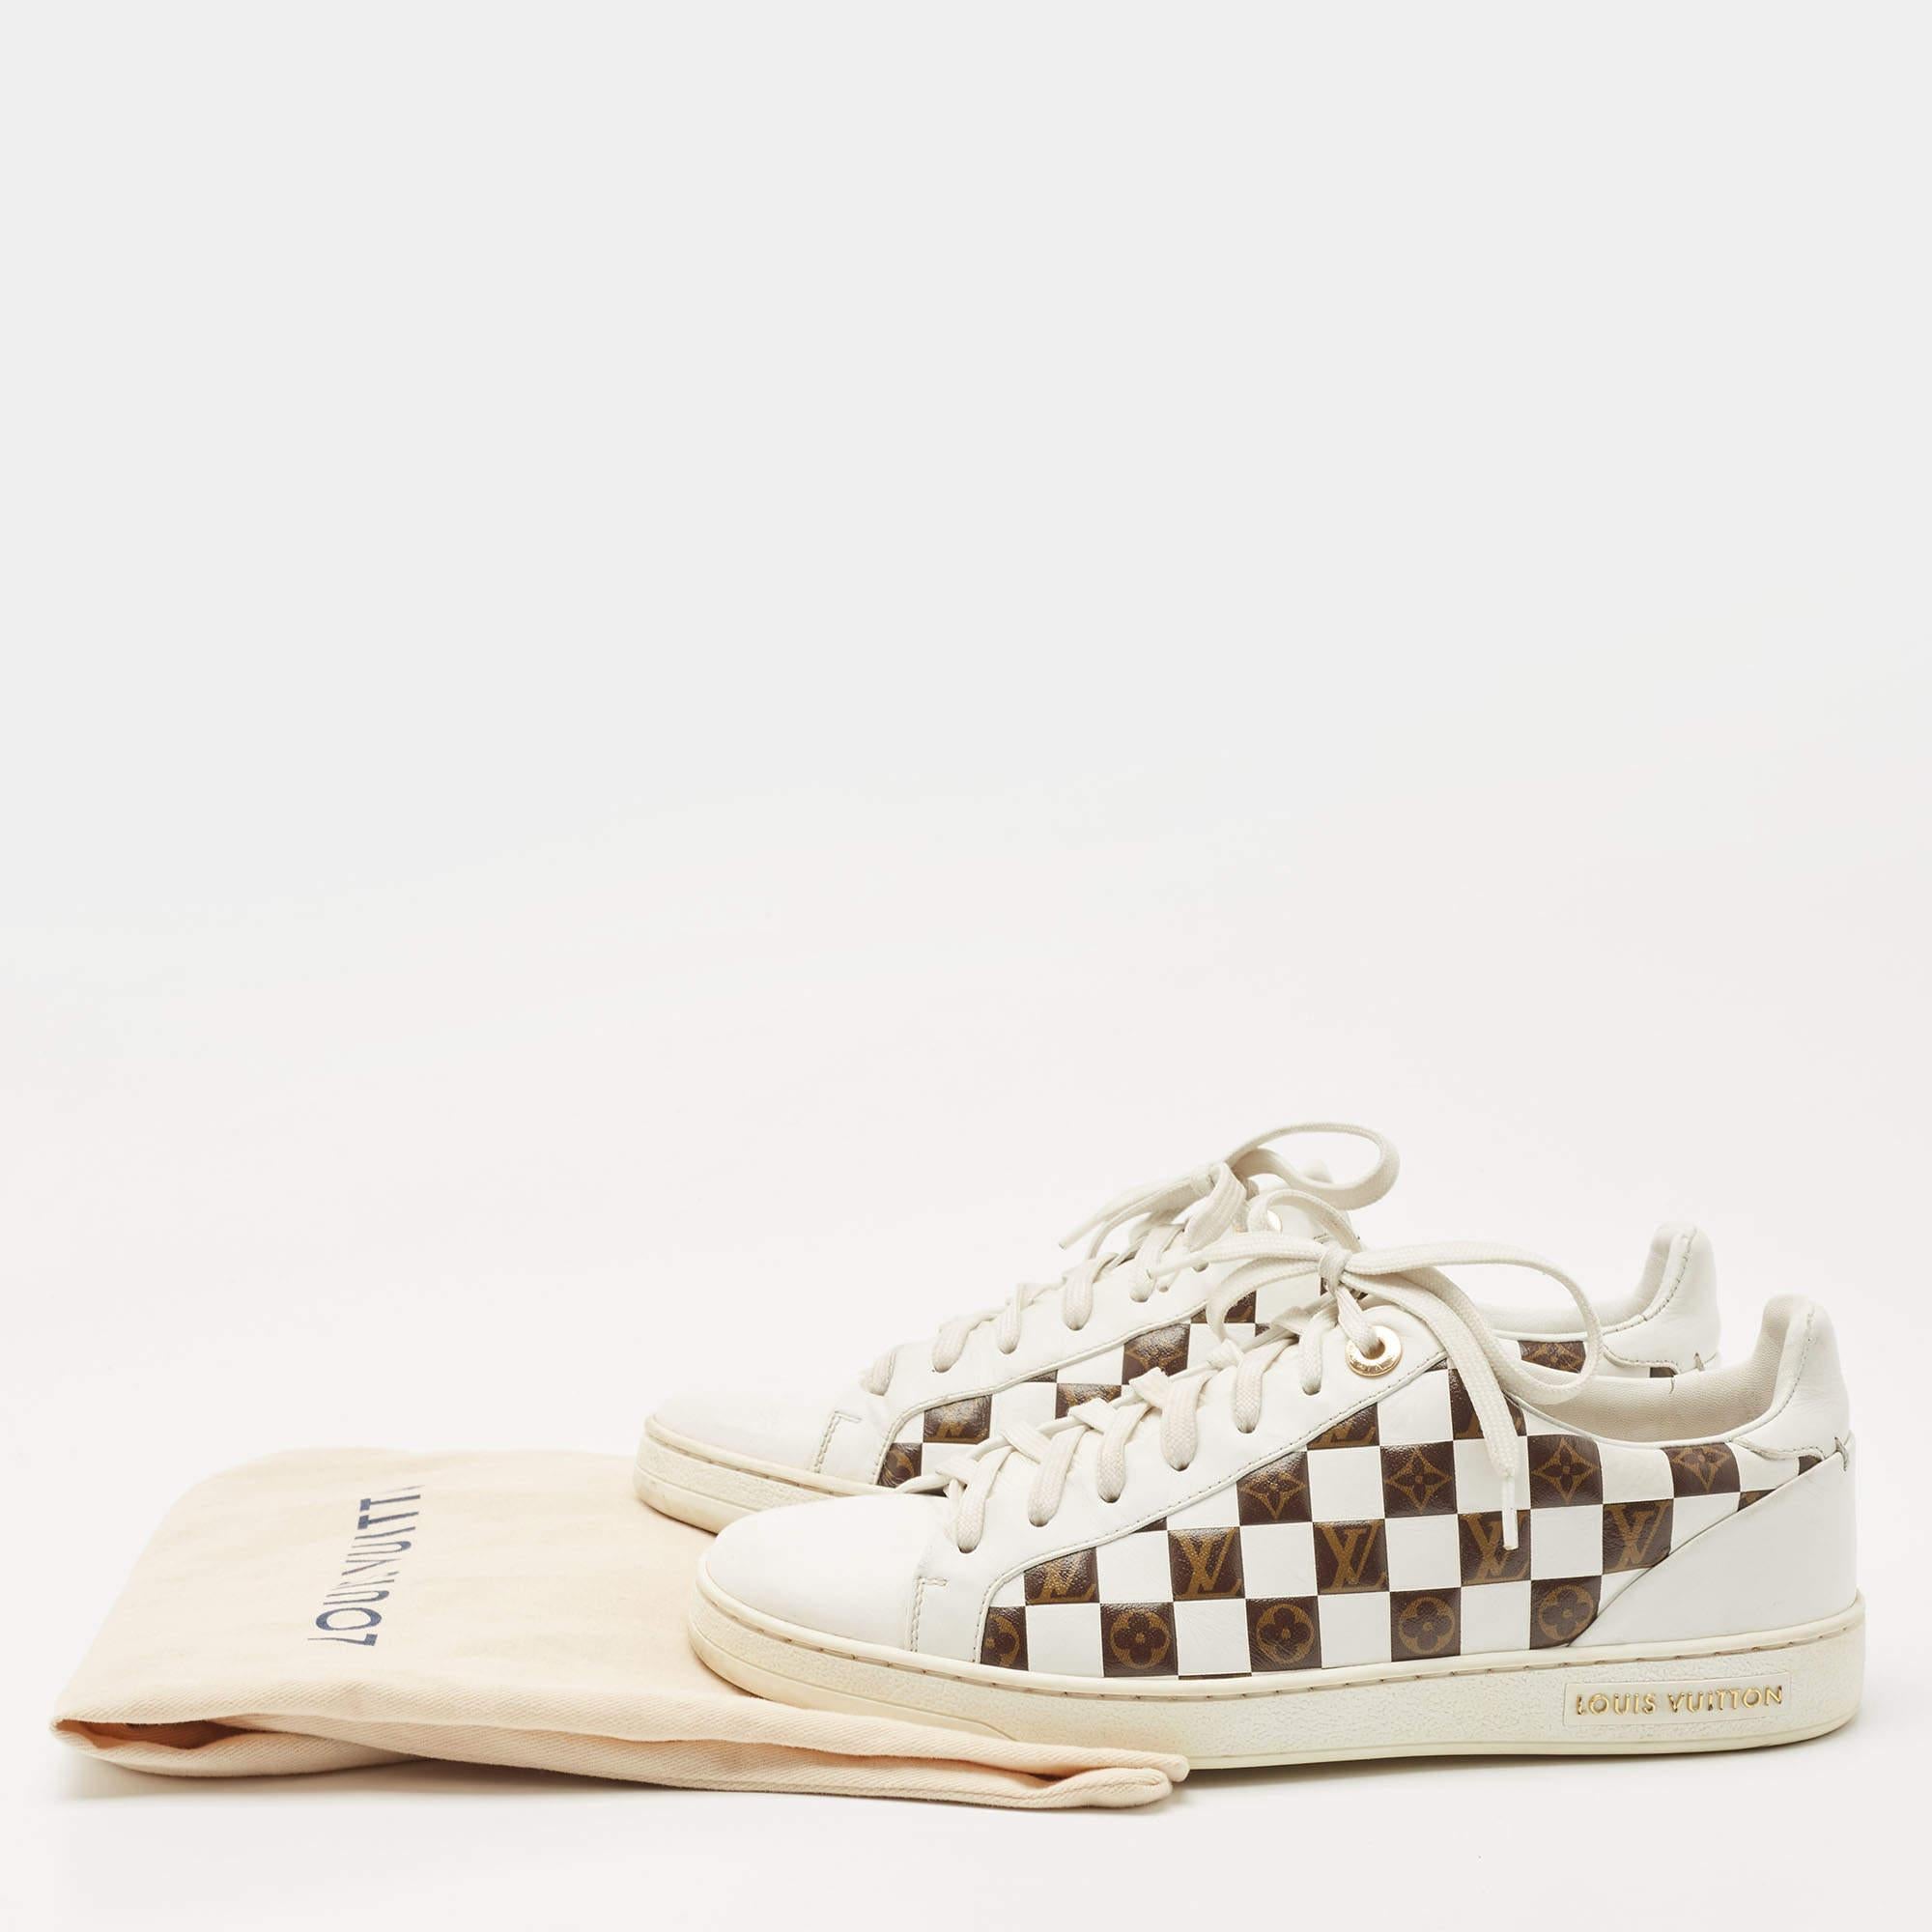 Louis Vuitton White/Brown Leather Monogram Printed Frontrow Sneakers Size 37.5 5